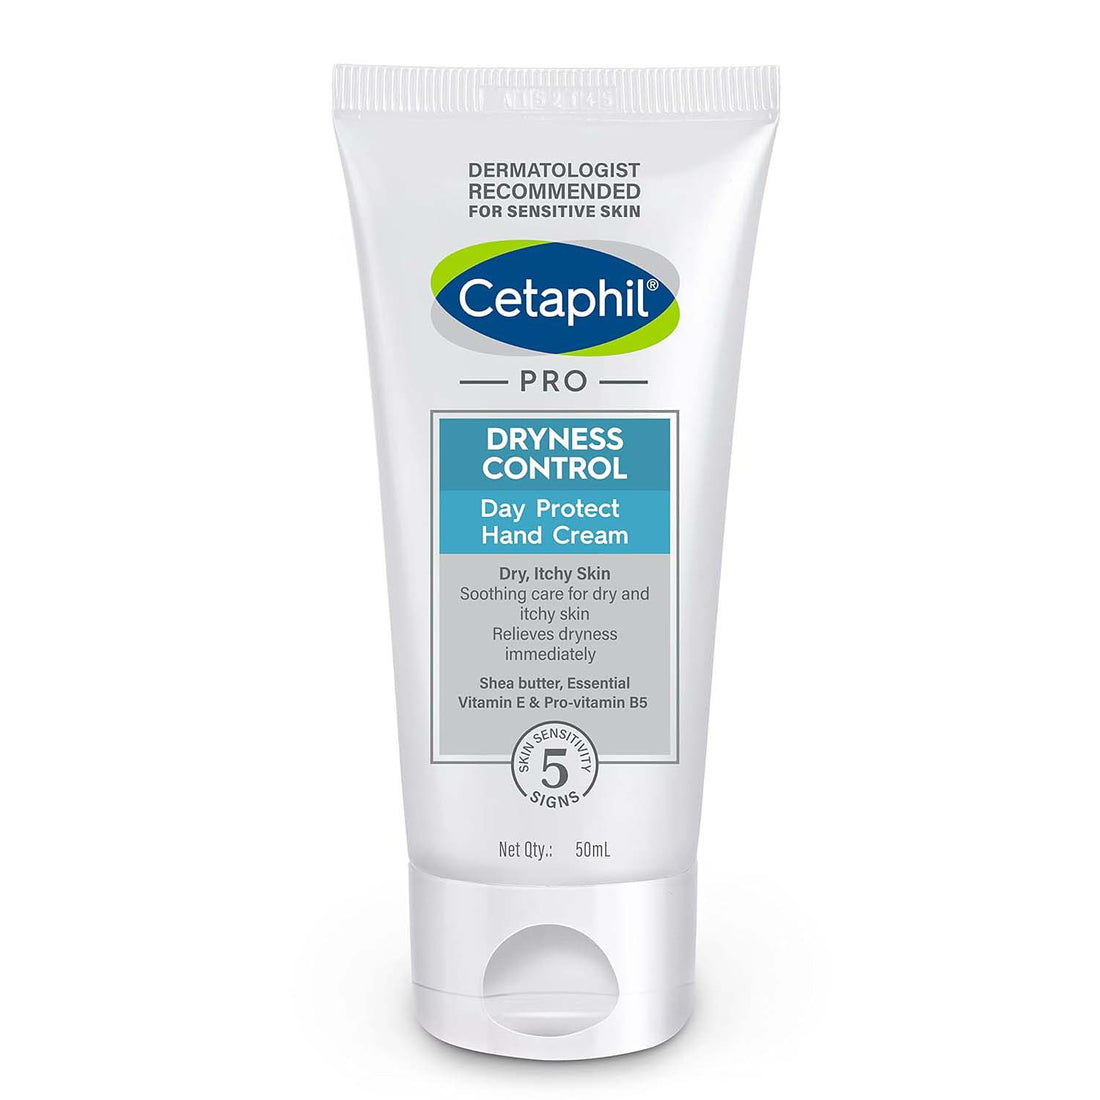 Cetaphil PRO Dryness Control Day Protect Hand Cream (50ml)